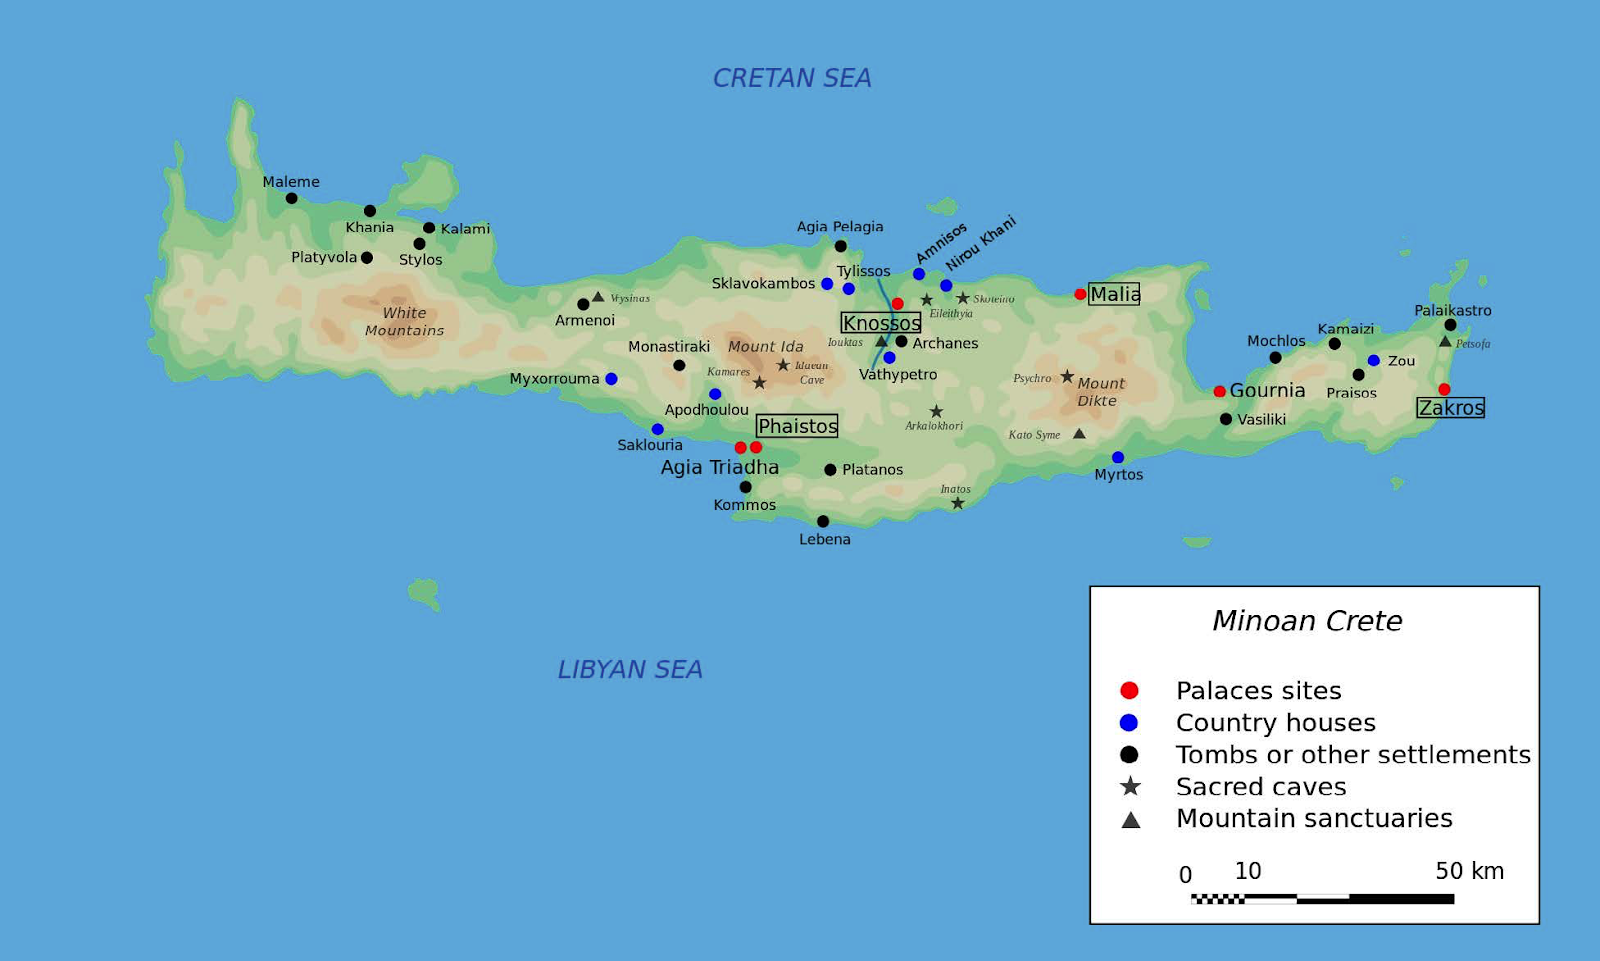 Map of Minoan Crete | Author: User “Bibi Saint-Poi” | Source: Wikimedia Commons | License: CC BY-SA 3.0